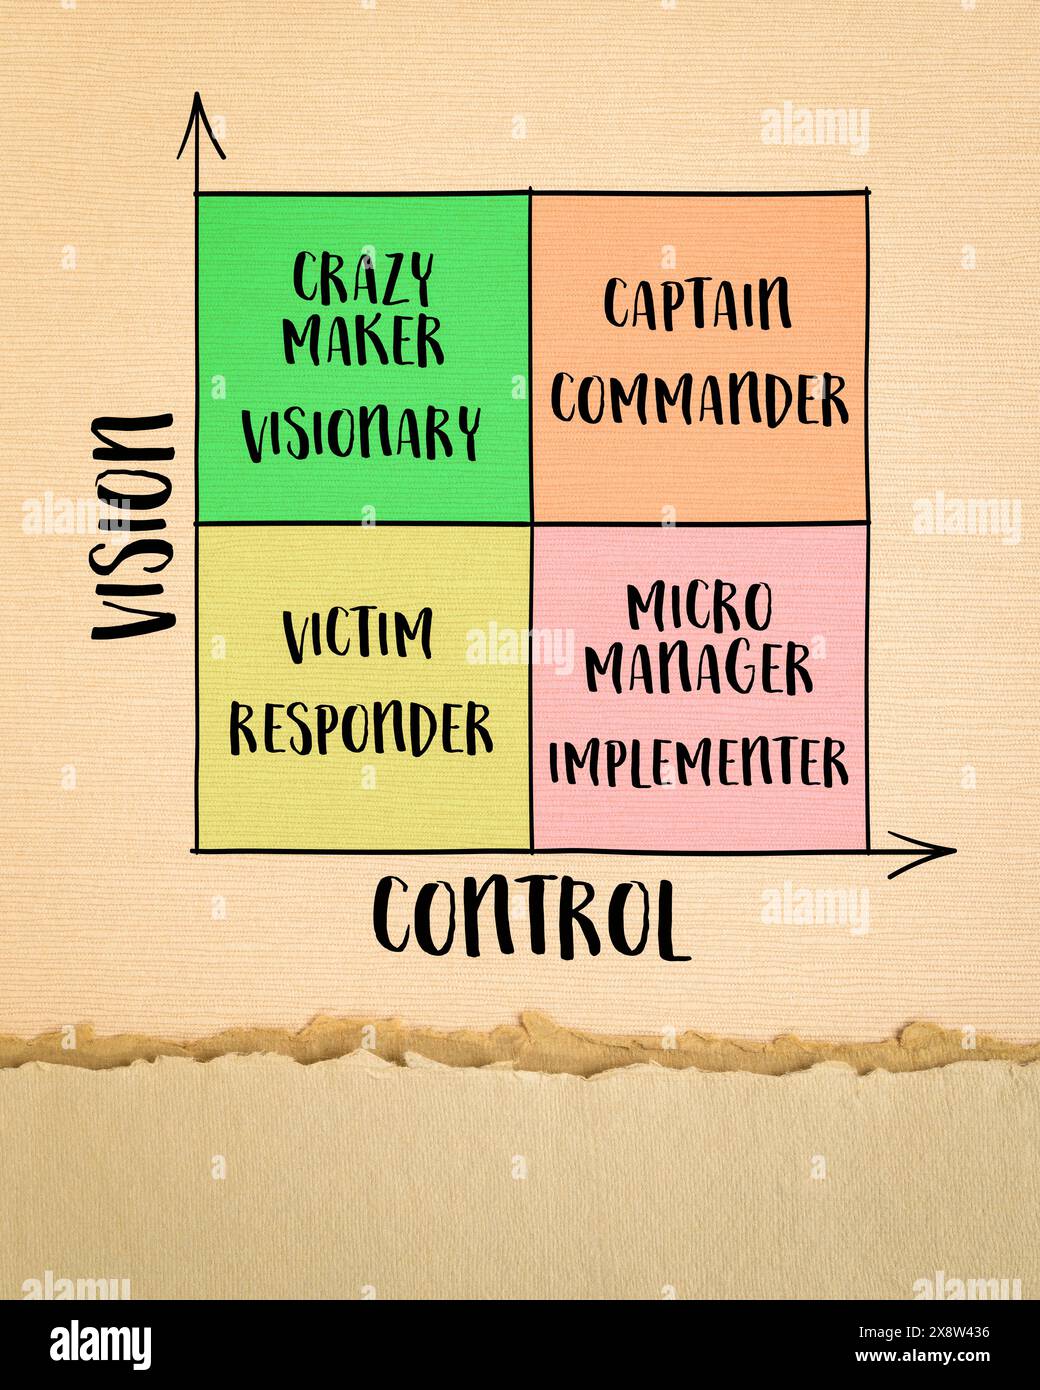 vision and control concept, self-management matrix, diagram sketch on art paper Stock Photo